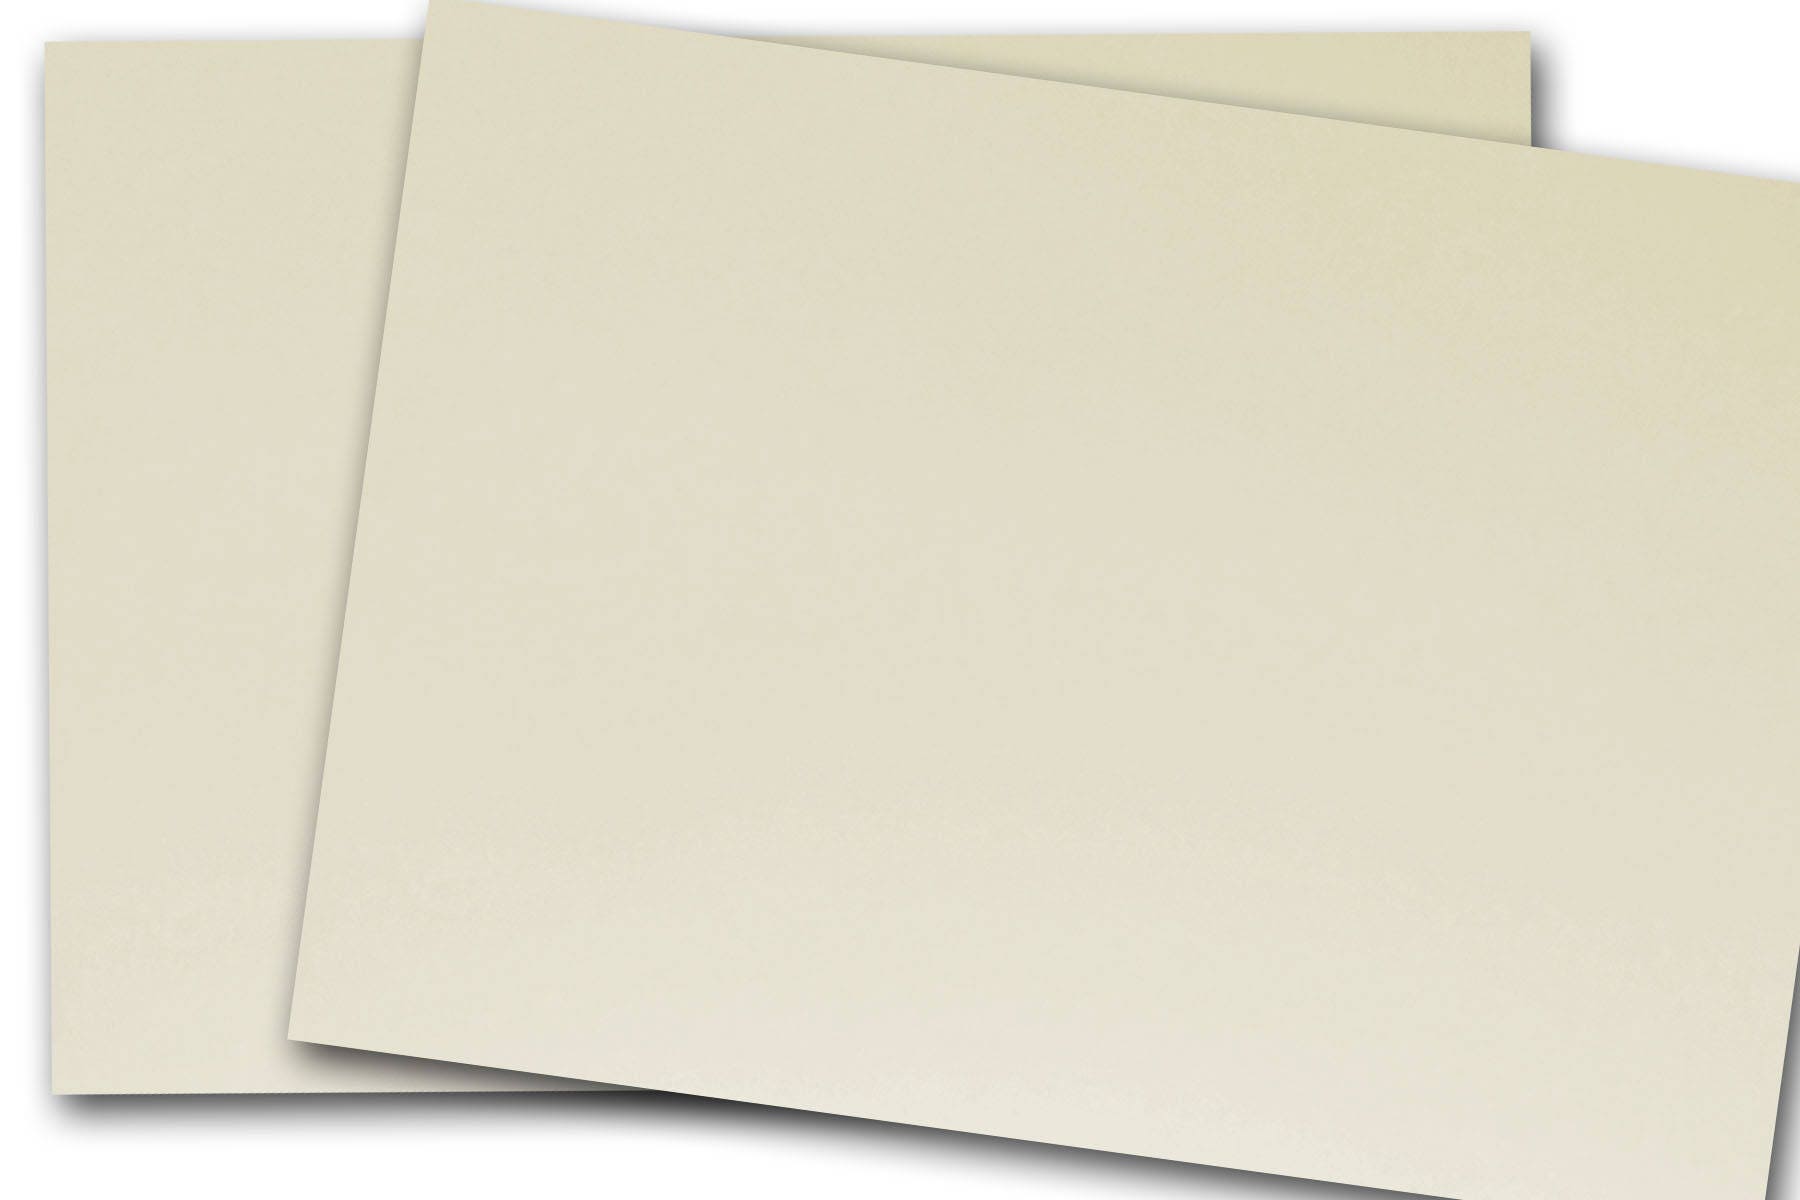 Premium White Heavyweight 100lb Super Smooth 8.5x11 Card Stock (50 Pack)